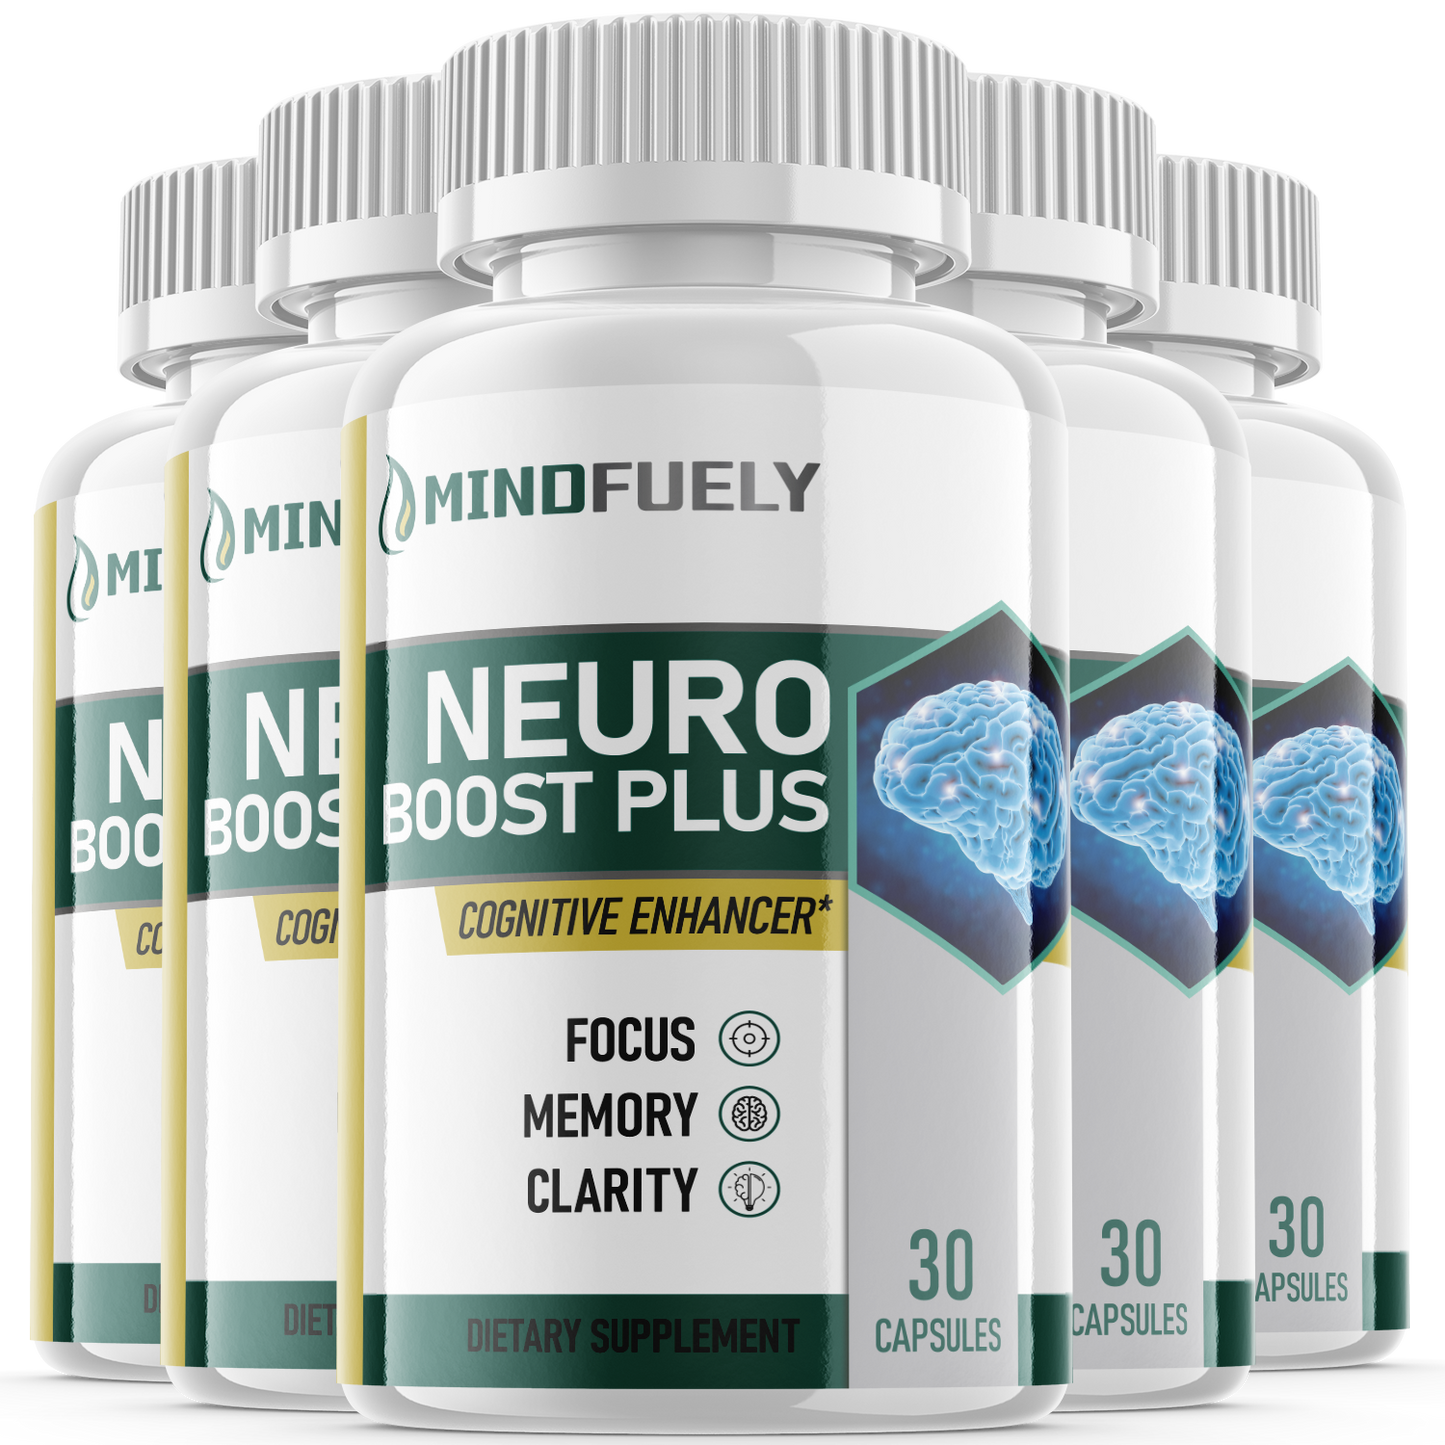 Mindfuely Neuro Boost Pills